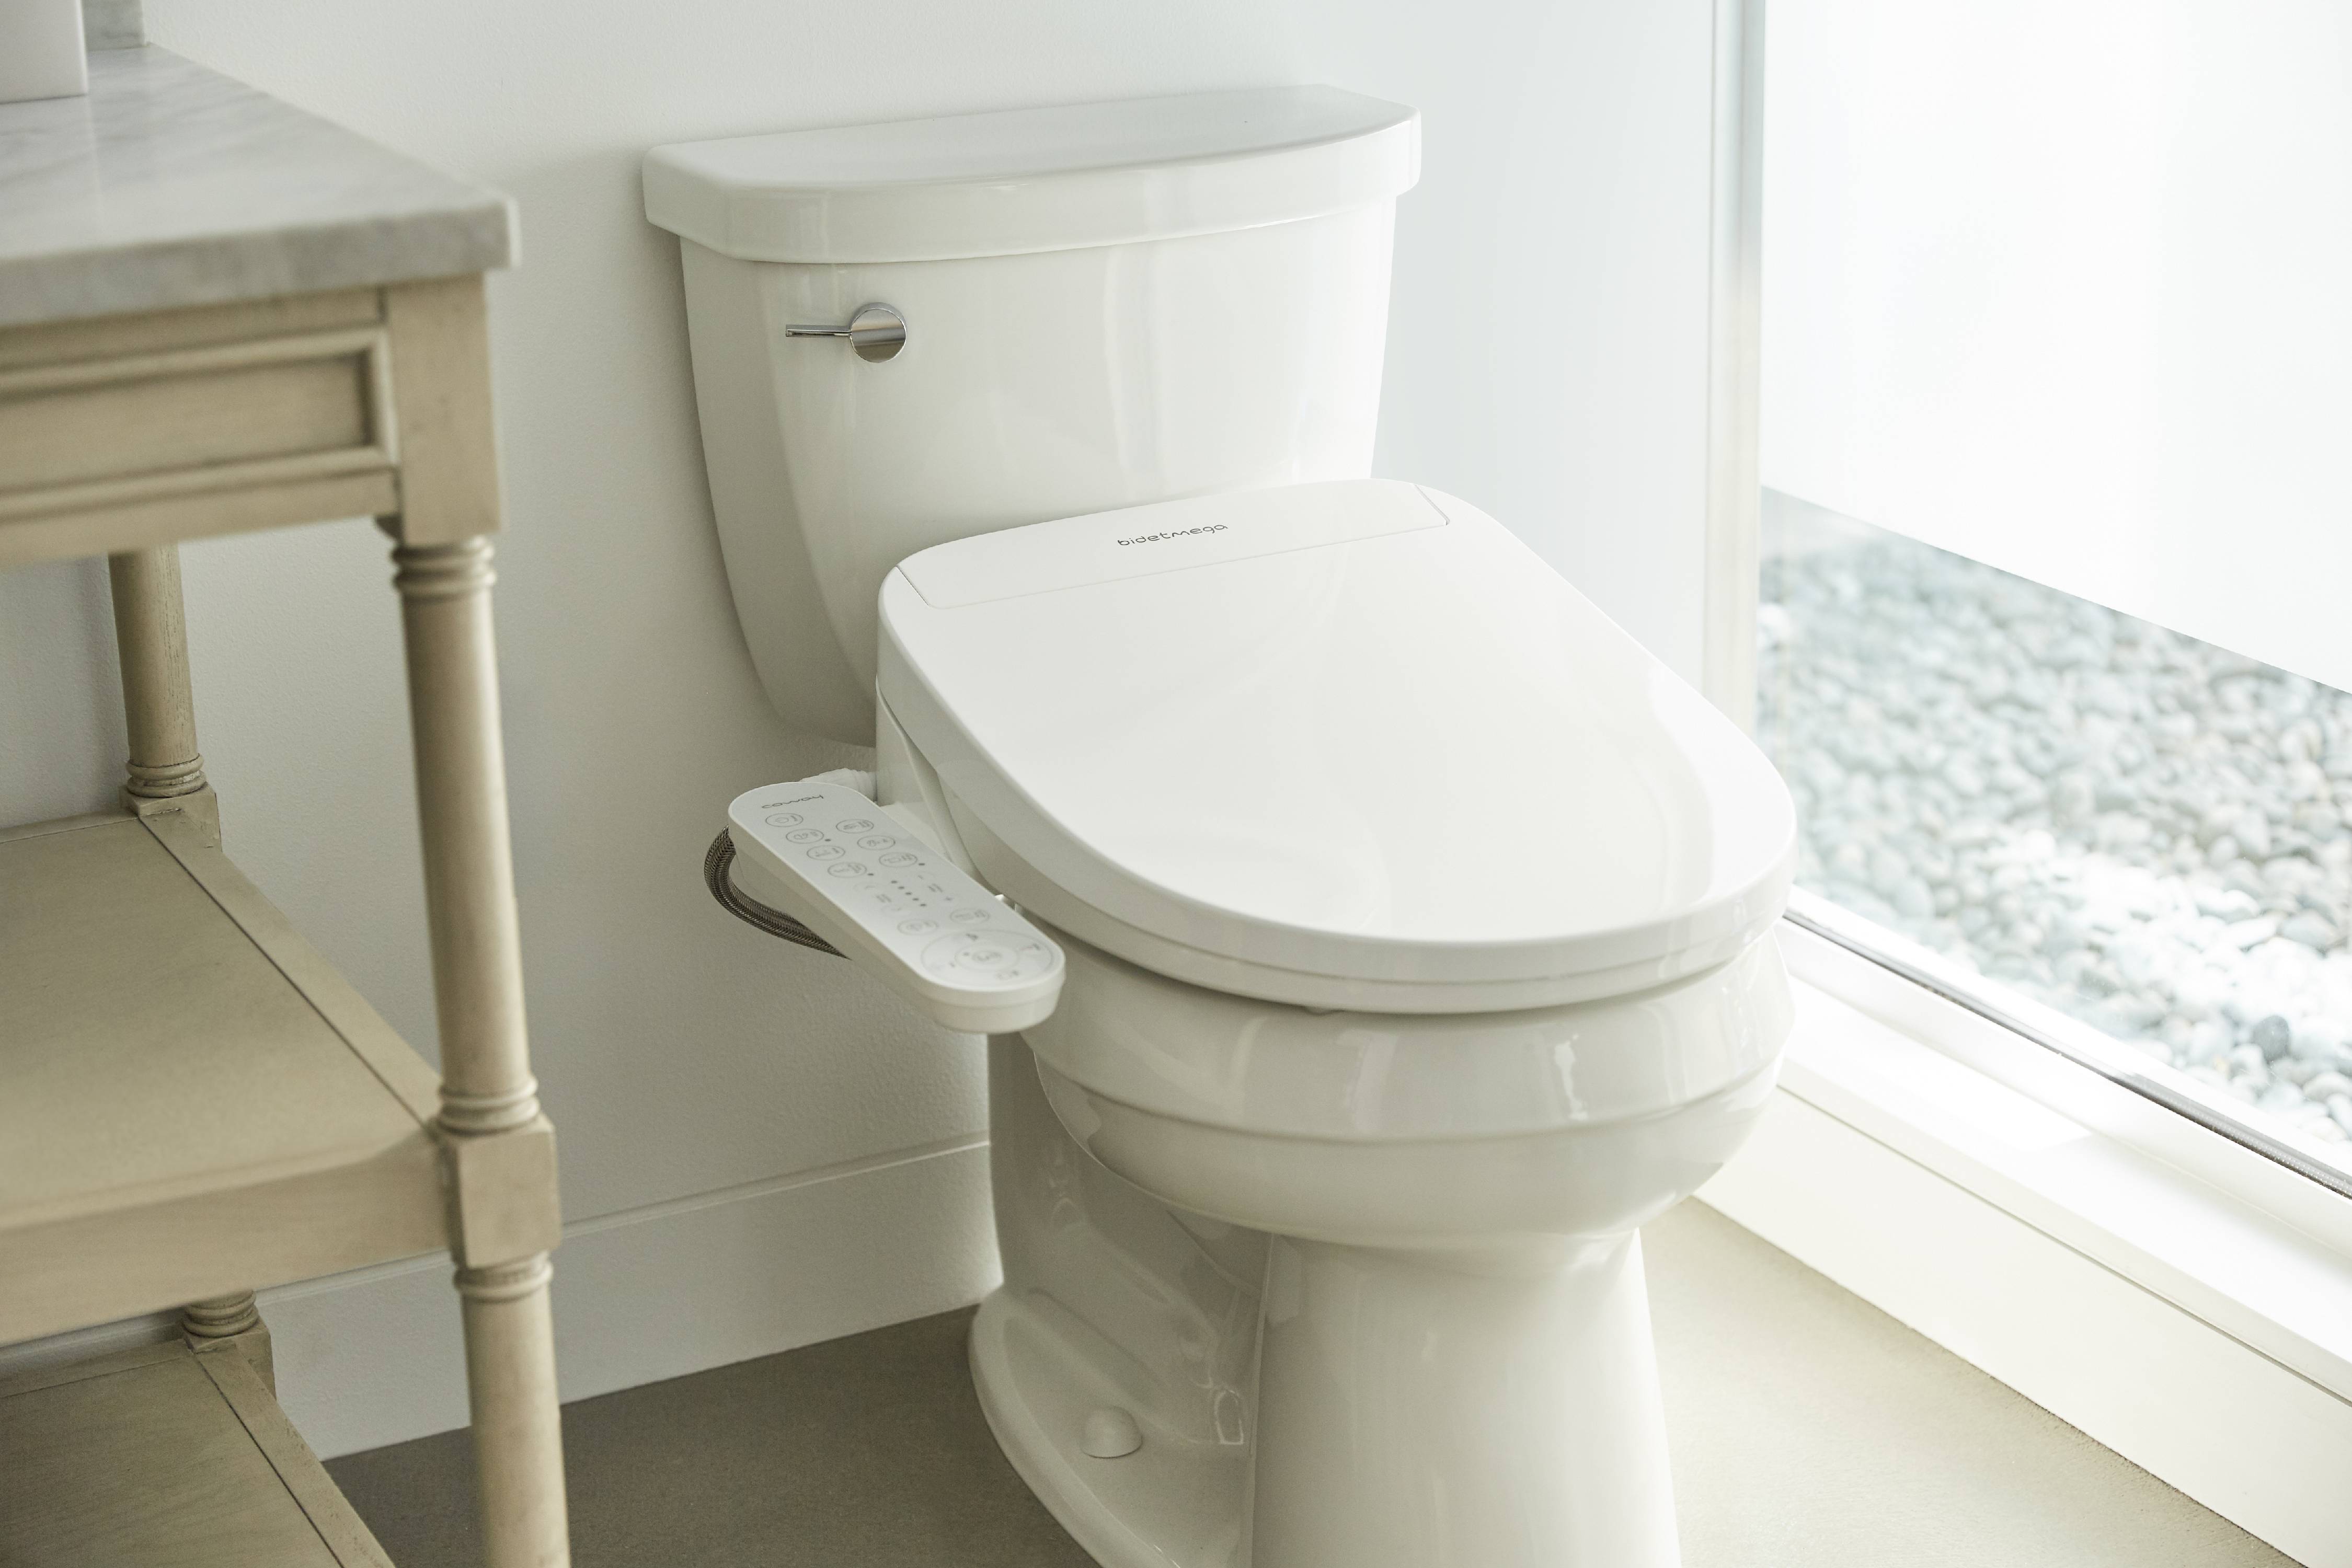 Coway Bidetmega 200 Smart Electronic Bidet Seat with Innovative i-WAVE Technology For Rounded Toilet Bowl - image 5 of 6